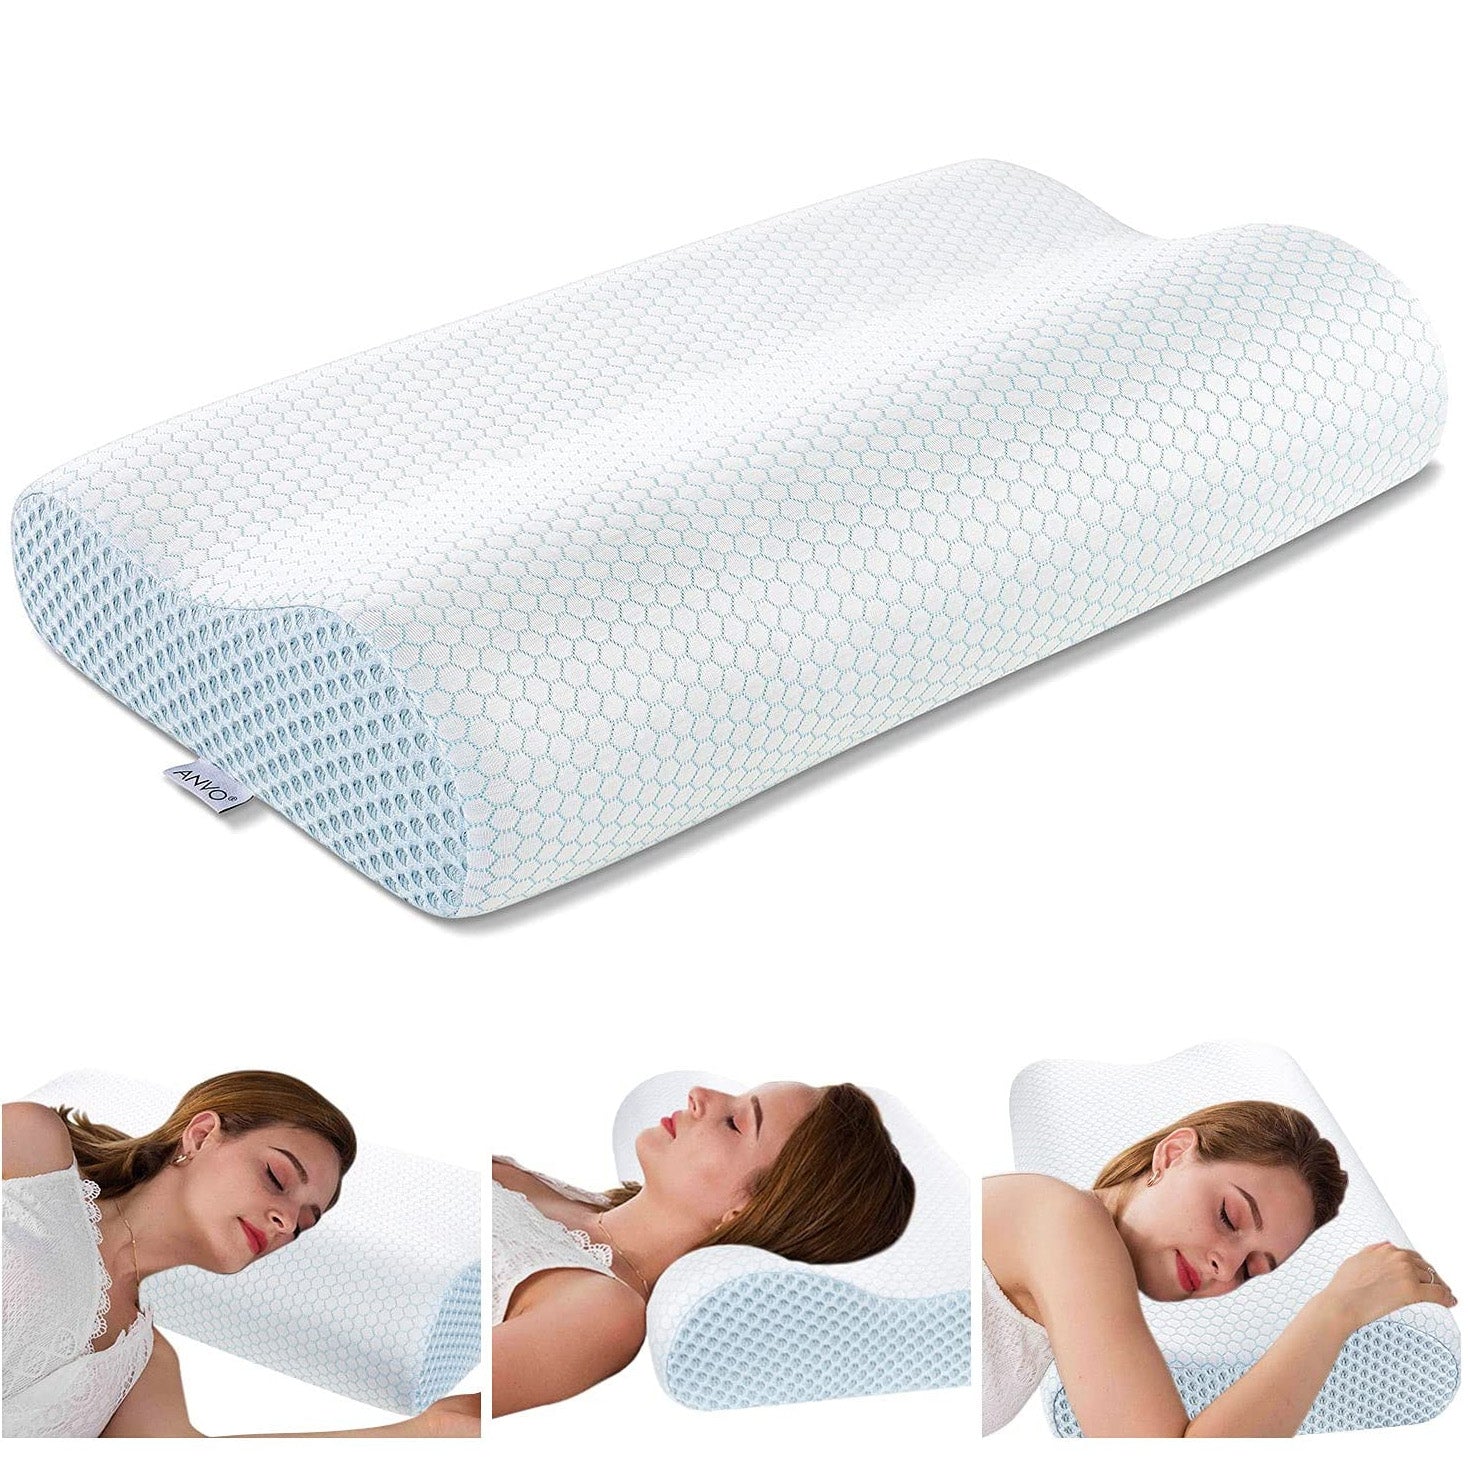 Memory Foam Neck Pillow - The Natural Posture